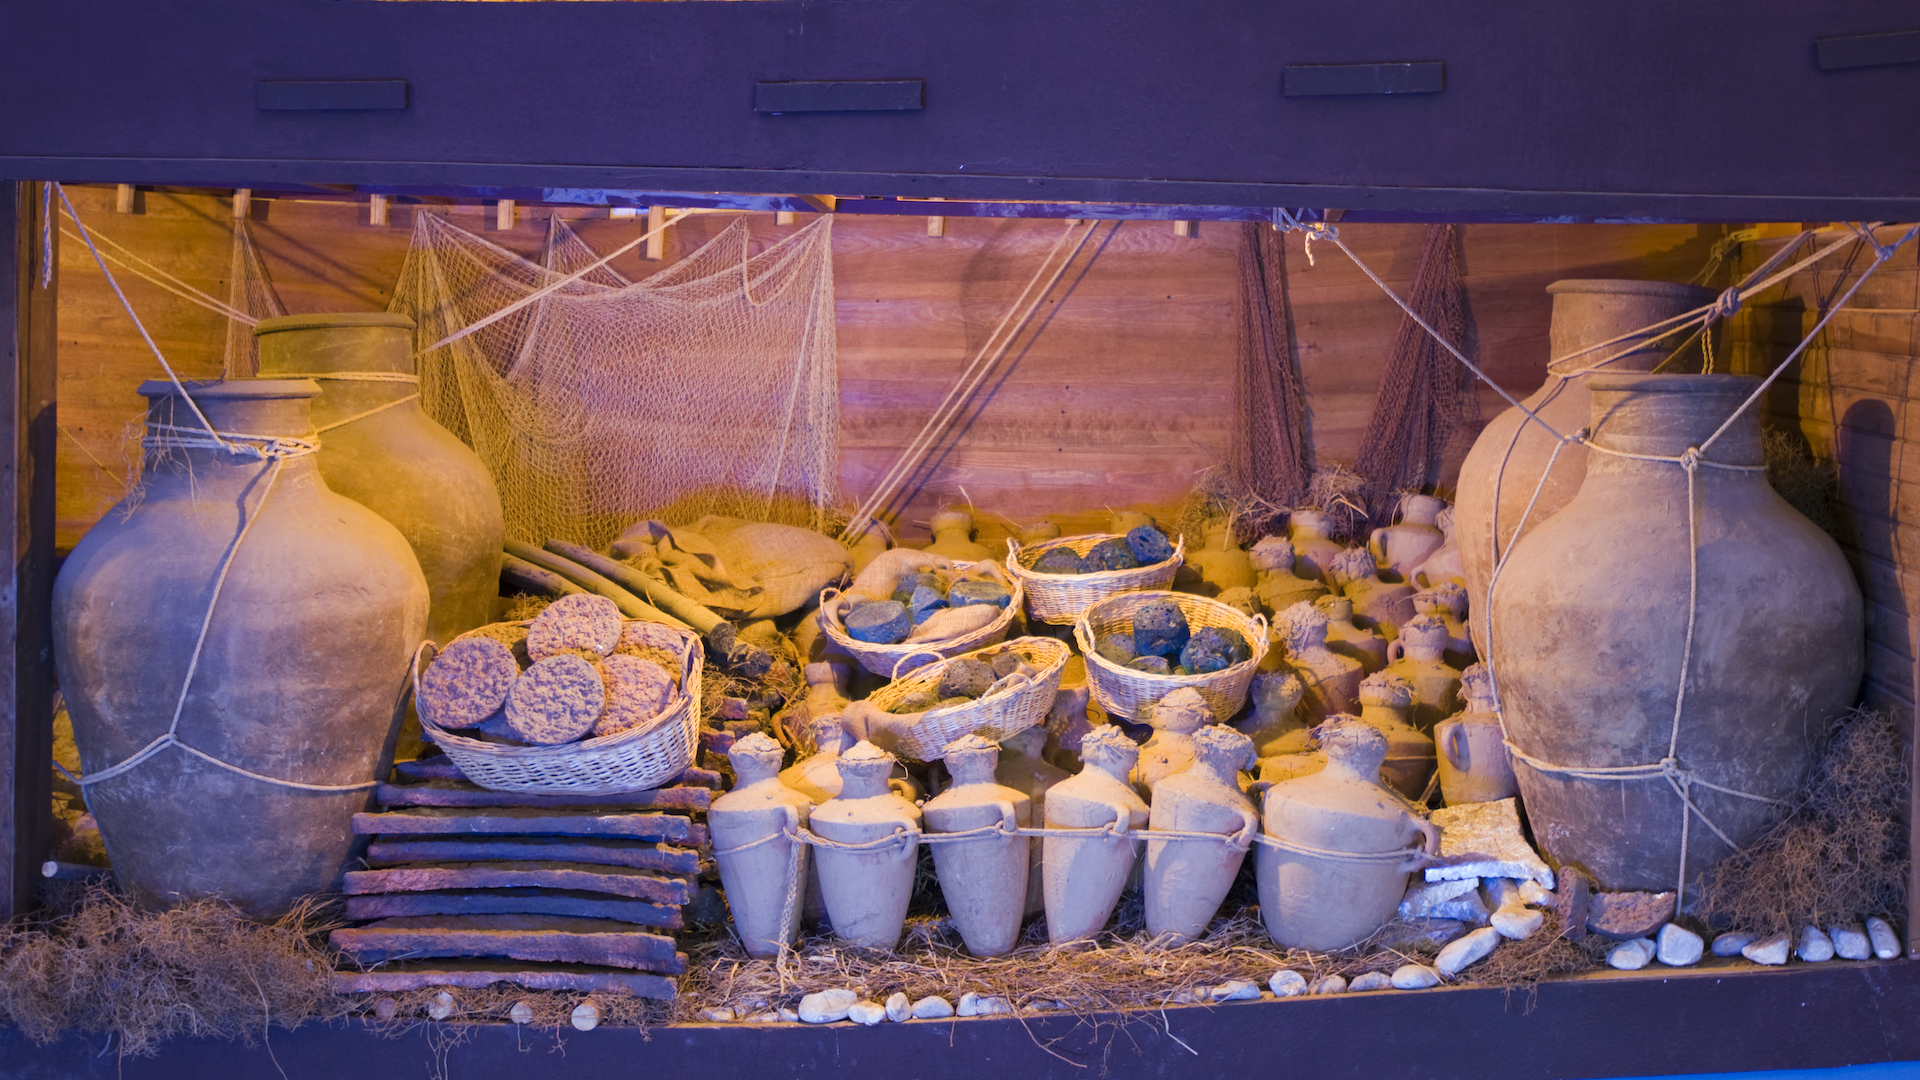 A shelf full of pottery found from the Uluburun shipwreck